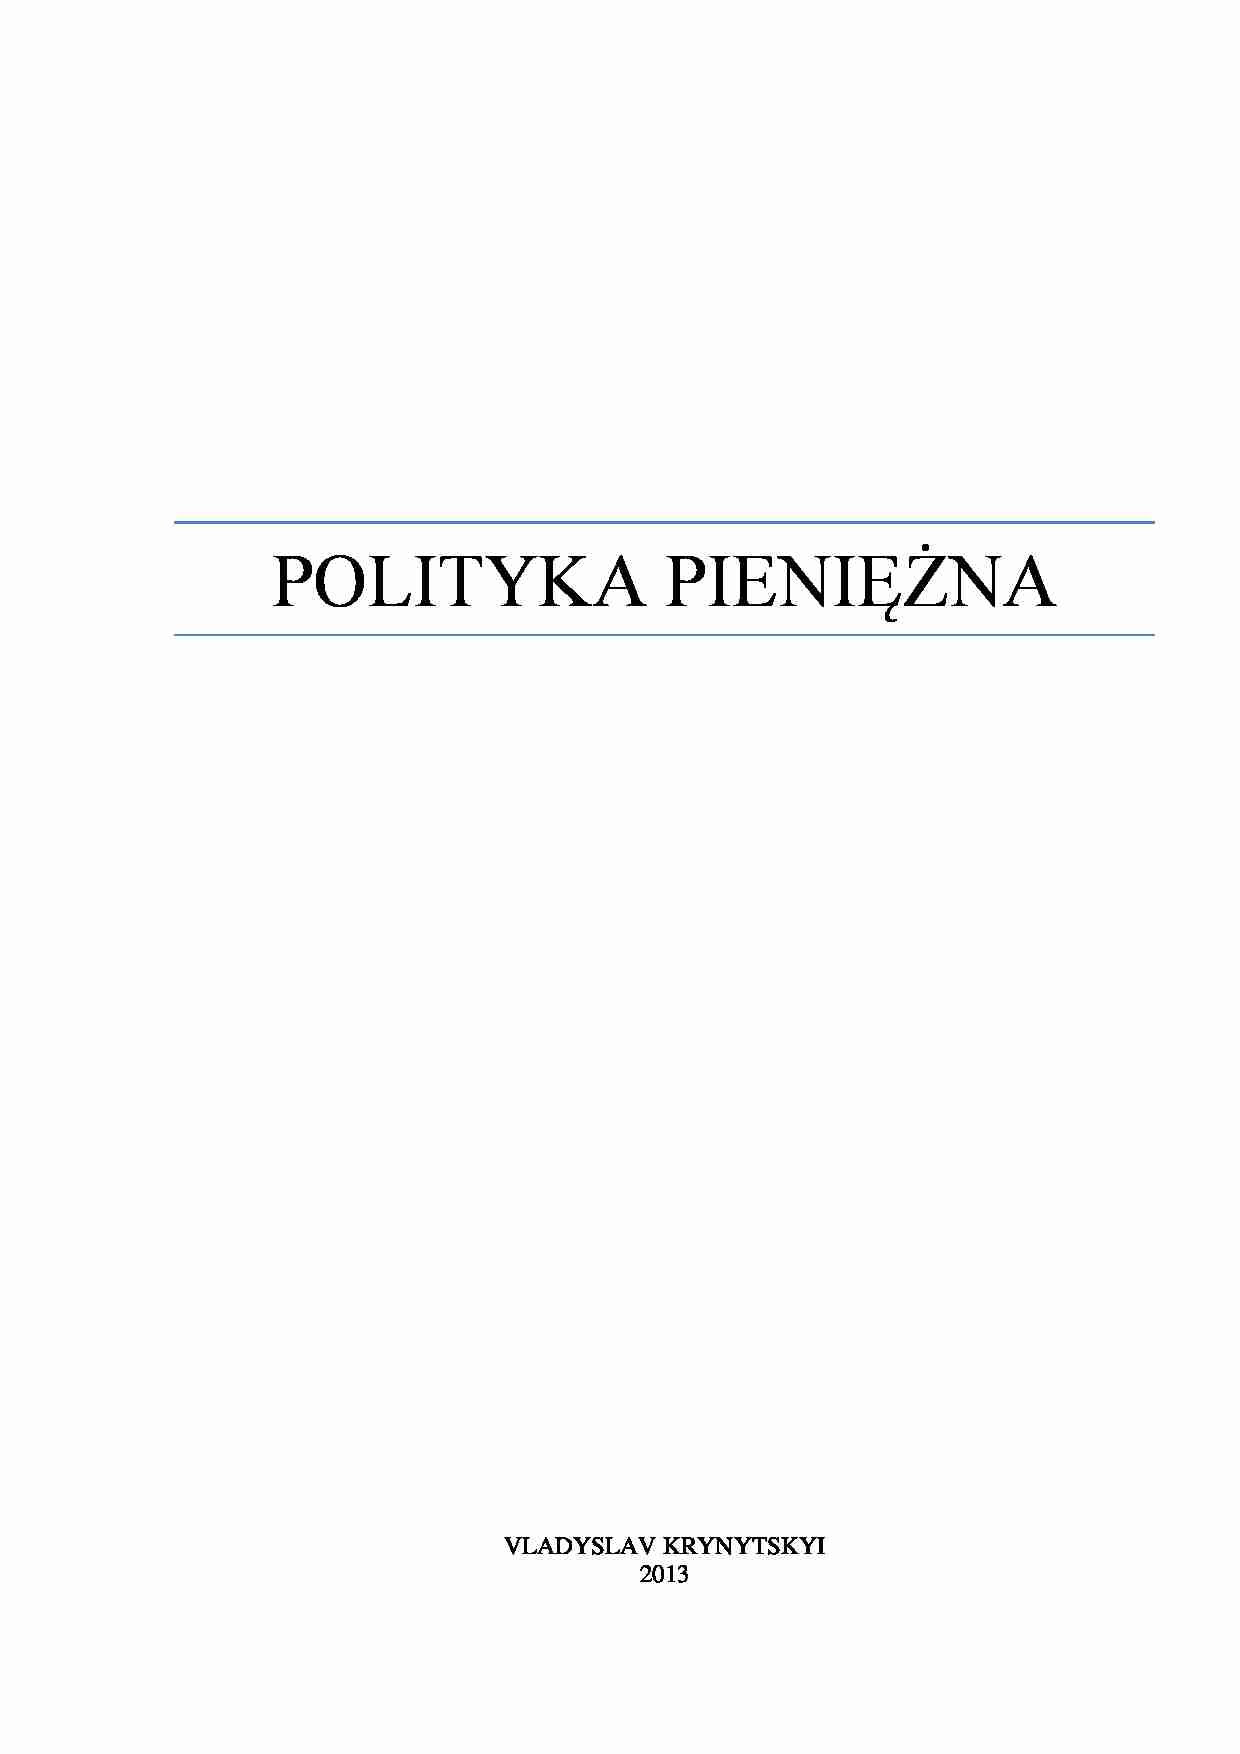 Polityka pieniężna - Bank Centralny - strona 1